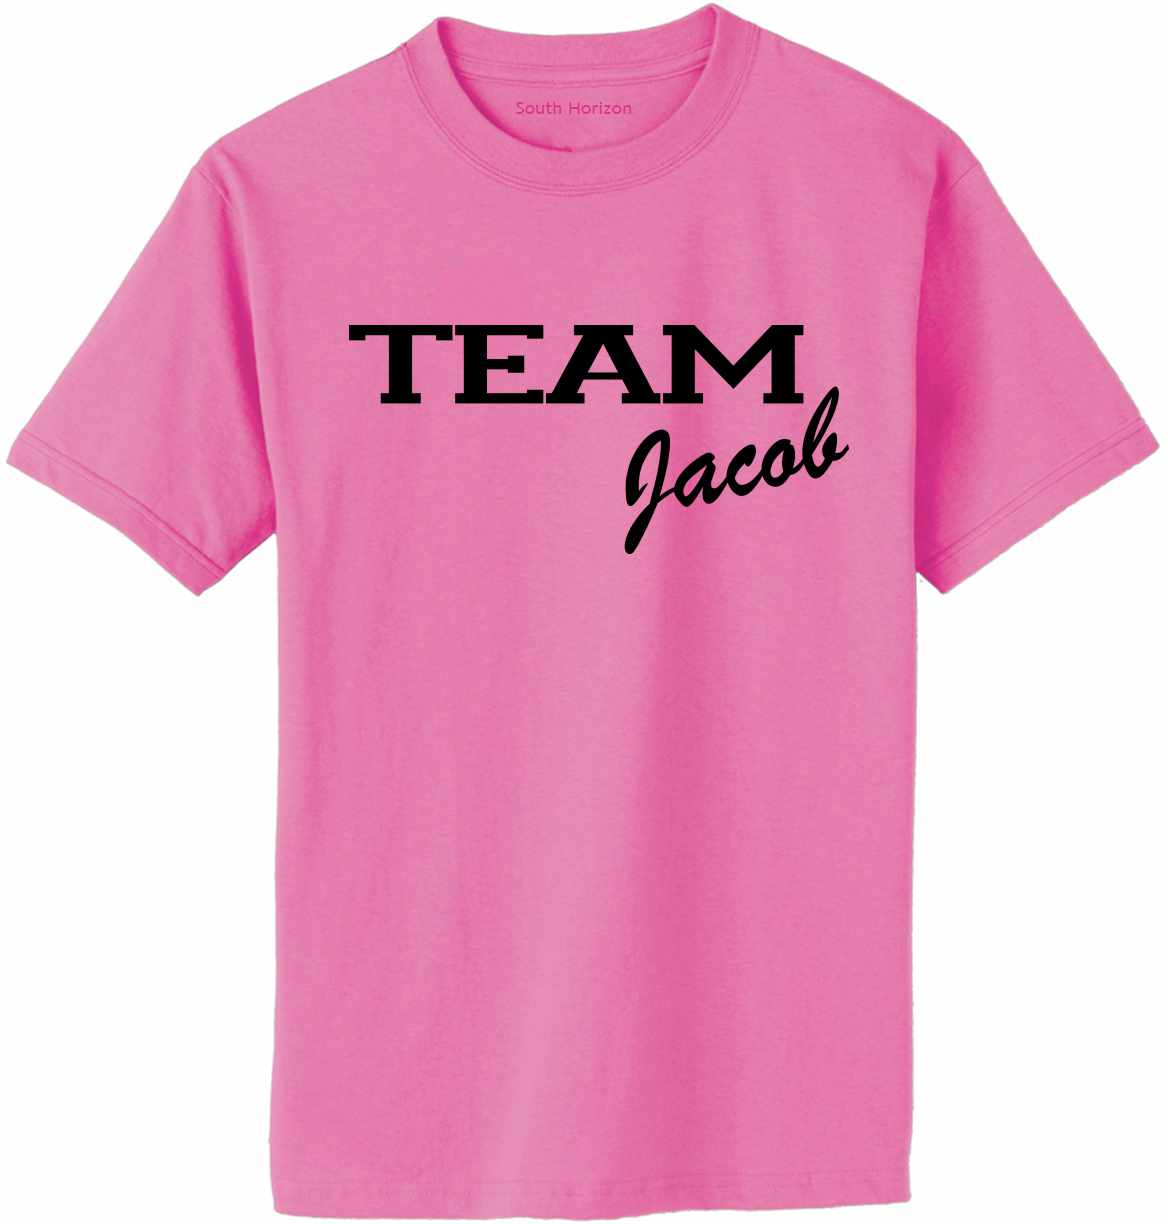 TEAM JACOB Adult T-Shirt (#257-1)